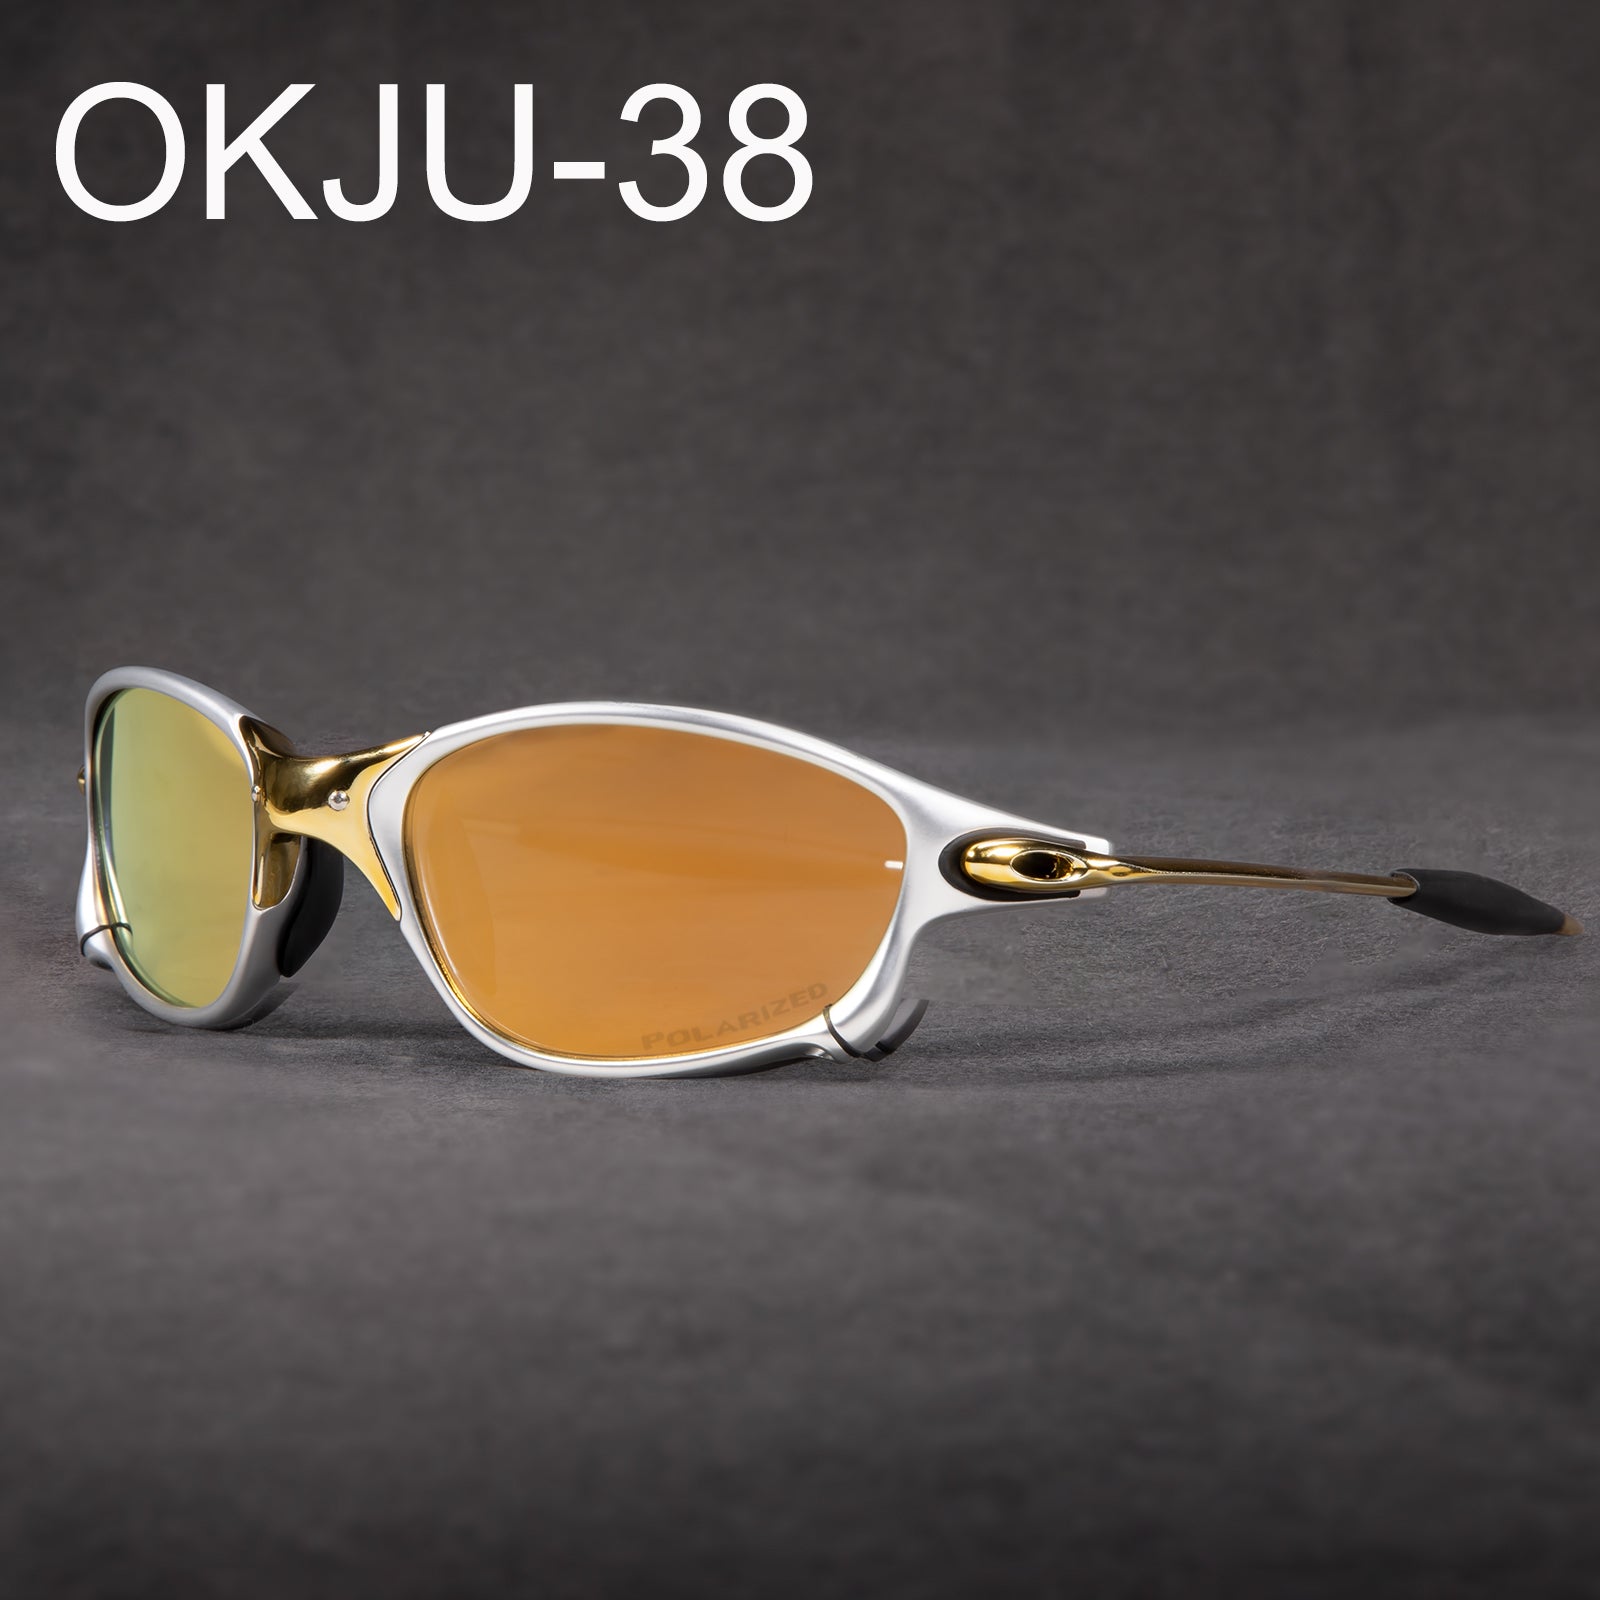 Oculos Oakley Juliet Original: comprar mais barato no Submarino